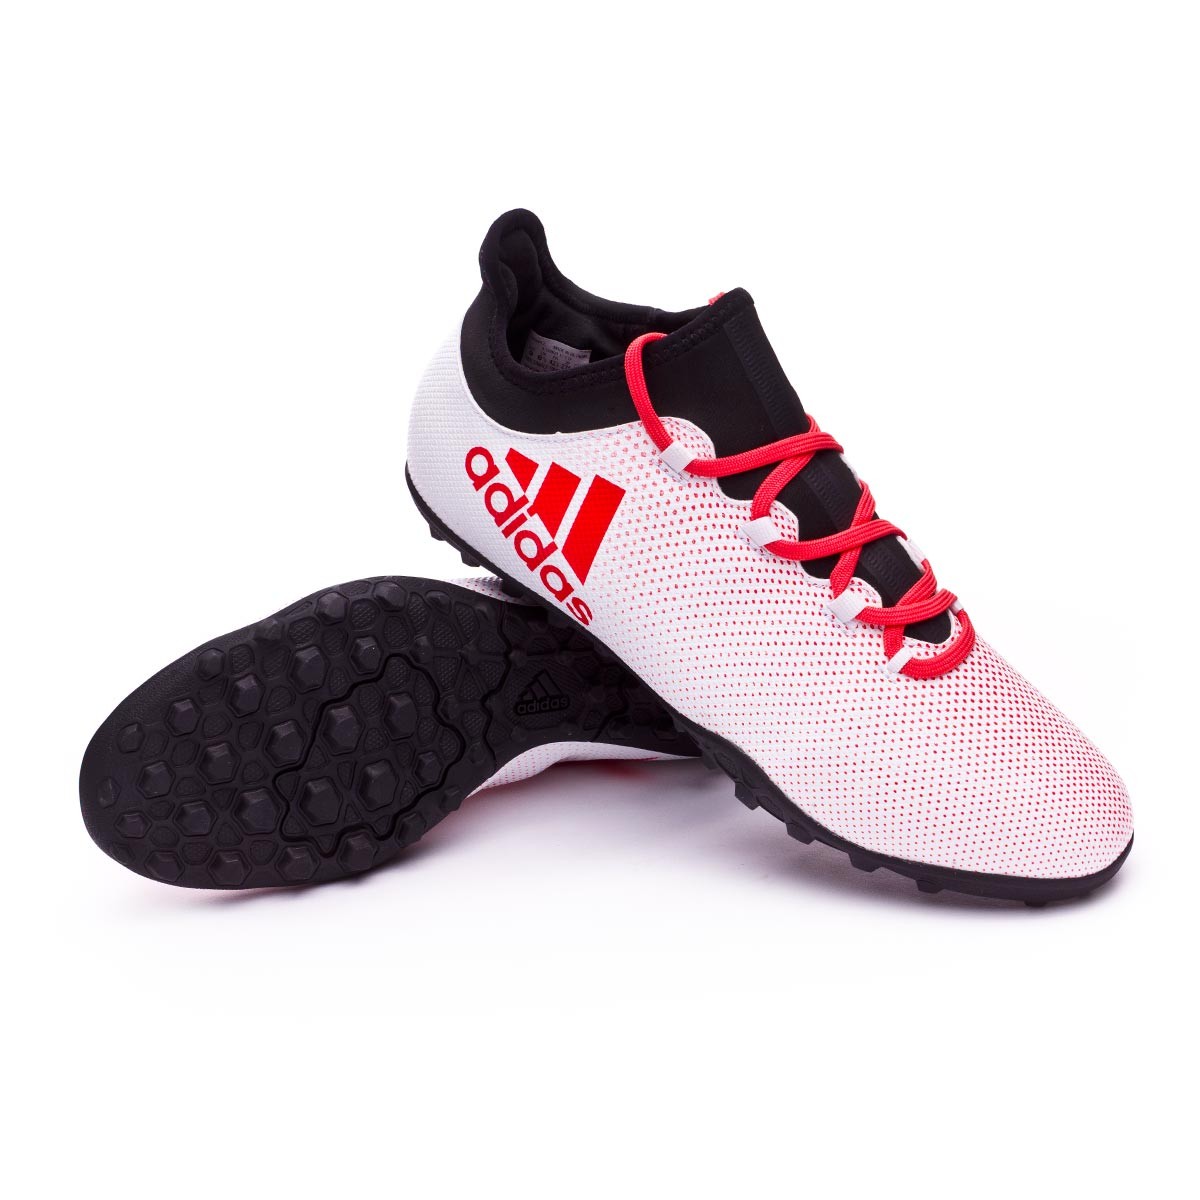 Football Boot adidas X Tango 17.3 Turf Grey-Real coral-Core black -  Football store Fútbol Emotion